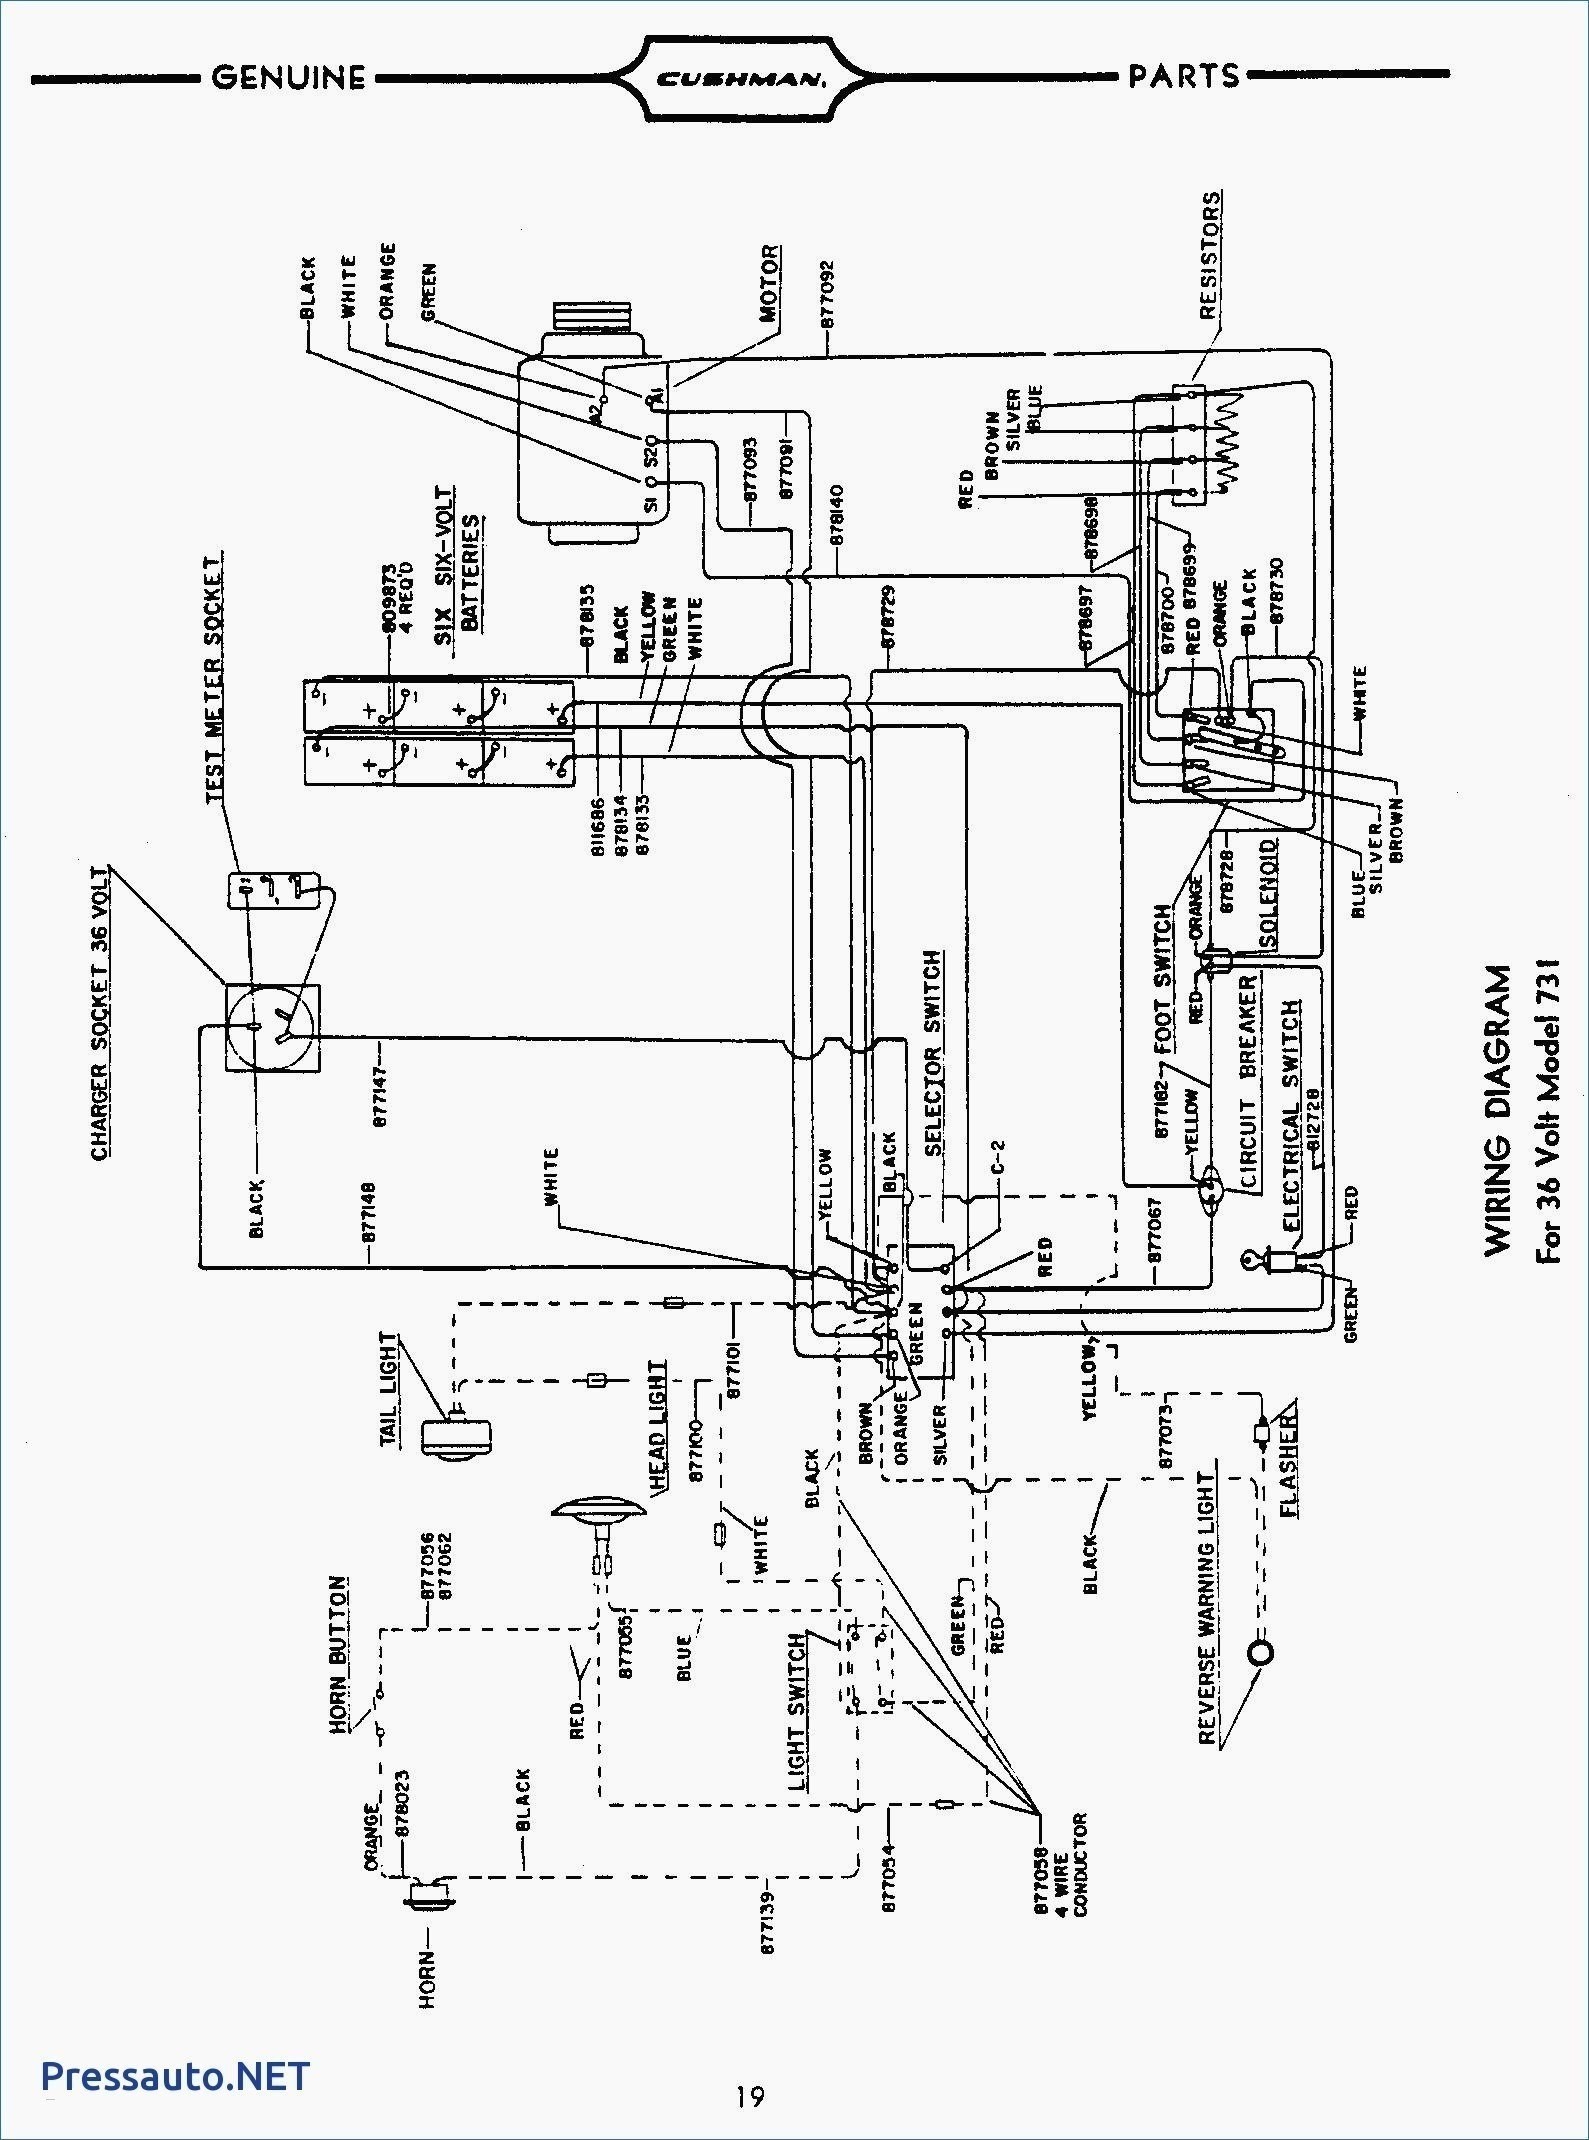 ezgo pds wiring diagram wiring diagram ez go electric golf cart refrence wiring diagram od rv park jmcdonaldfo 2n